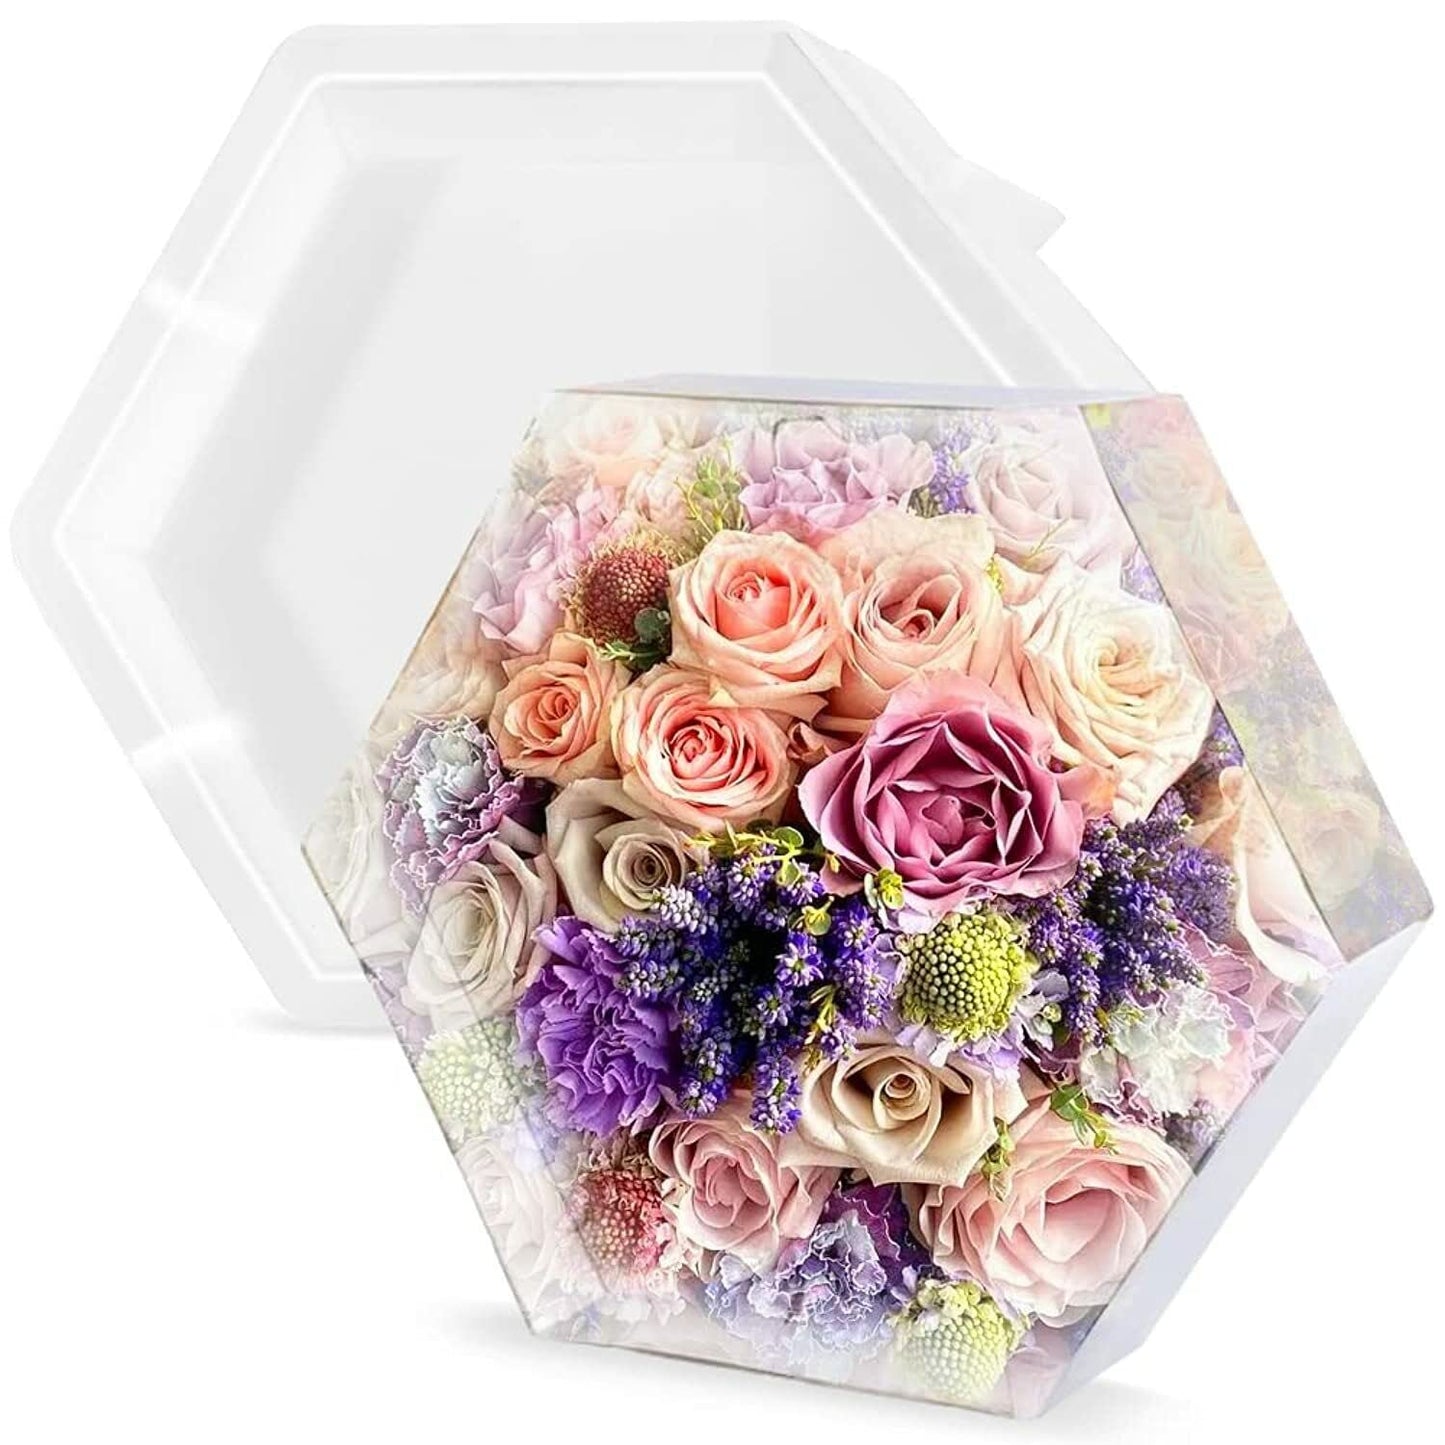 10" Hexagon Molds for Resin (10 Inch),Deep Epoxy Resin Molds for Flowers Preservation,Resin Art, Casting Resin,Resin Epoxy,DIY Wedding,Valentine,Anniversary